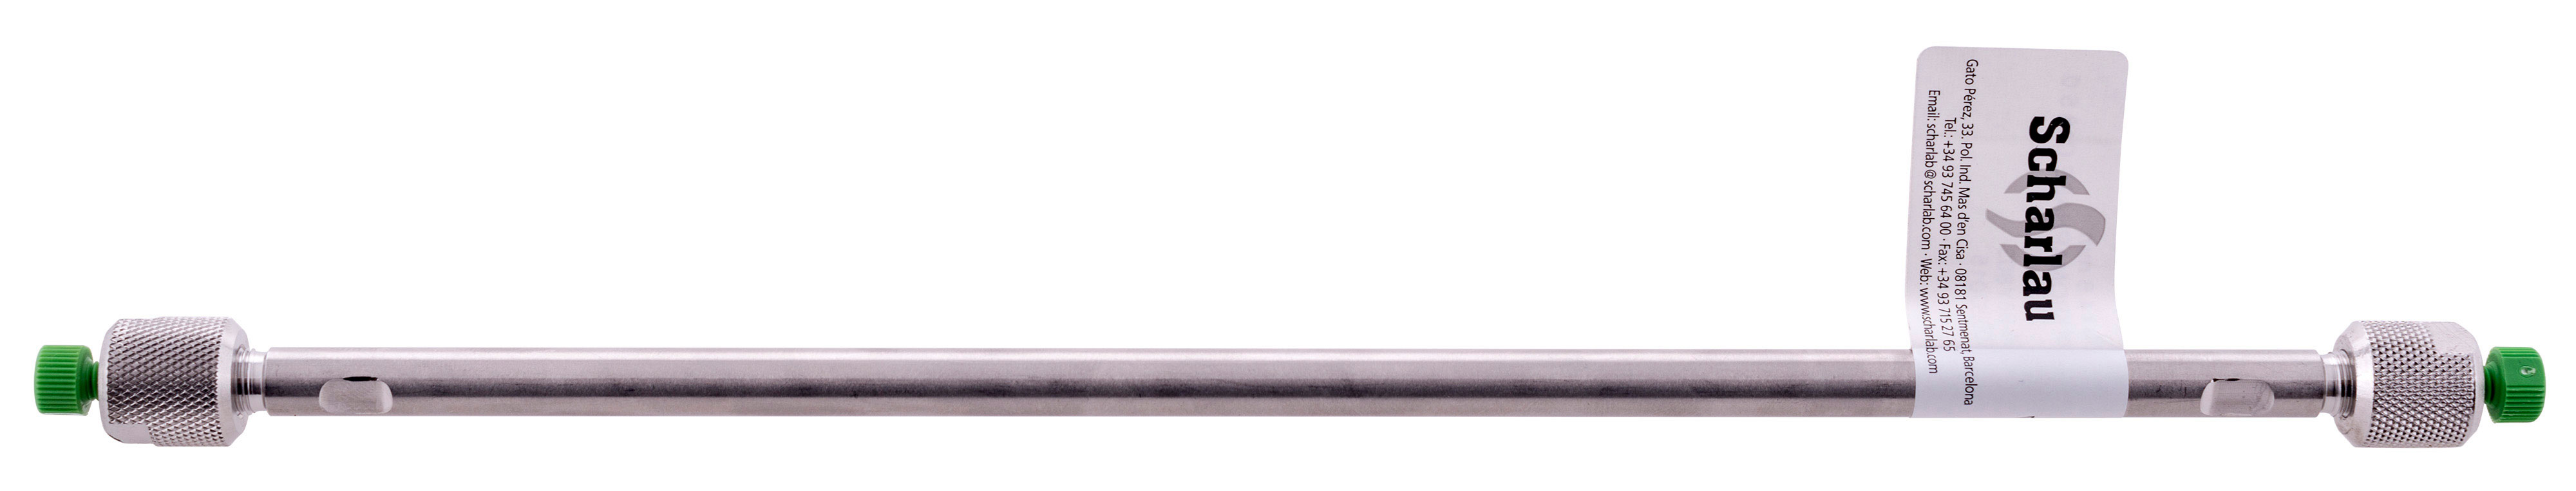 Columna KromaPhase 4,6mm D.I. SCHARLAU. Fase: SIL. Tamaño de particula (µm): 3,5. Tamaño de poro (Å): 100. Longitud (mm): 125. Diámetro interno (mm): 4,6